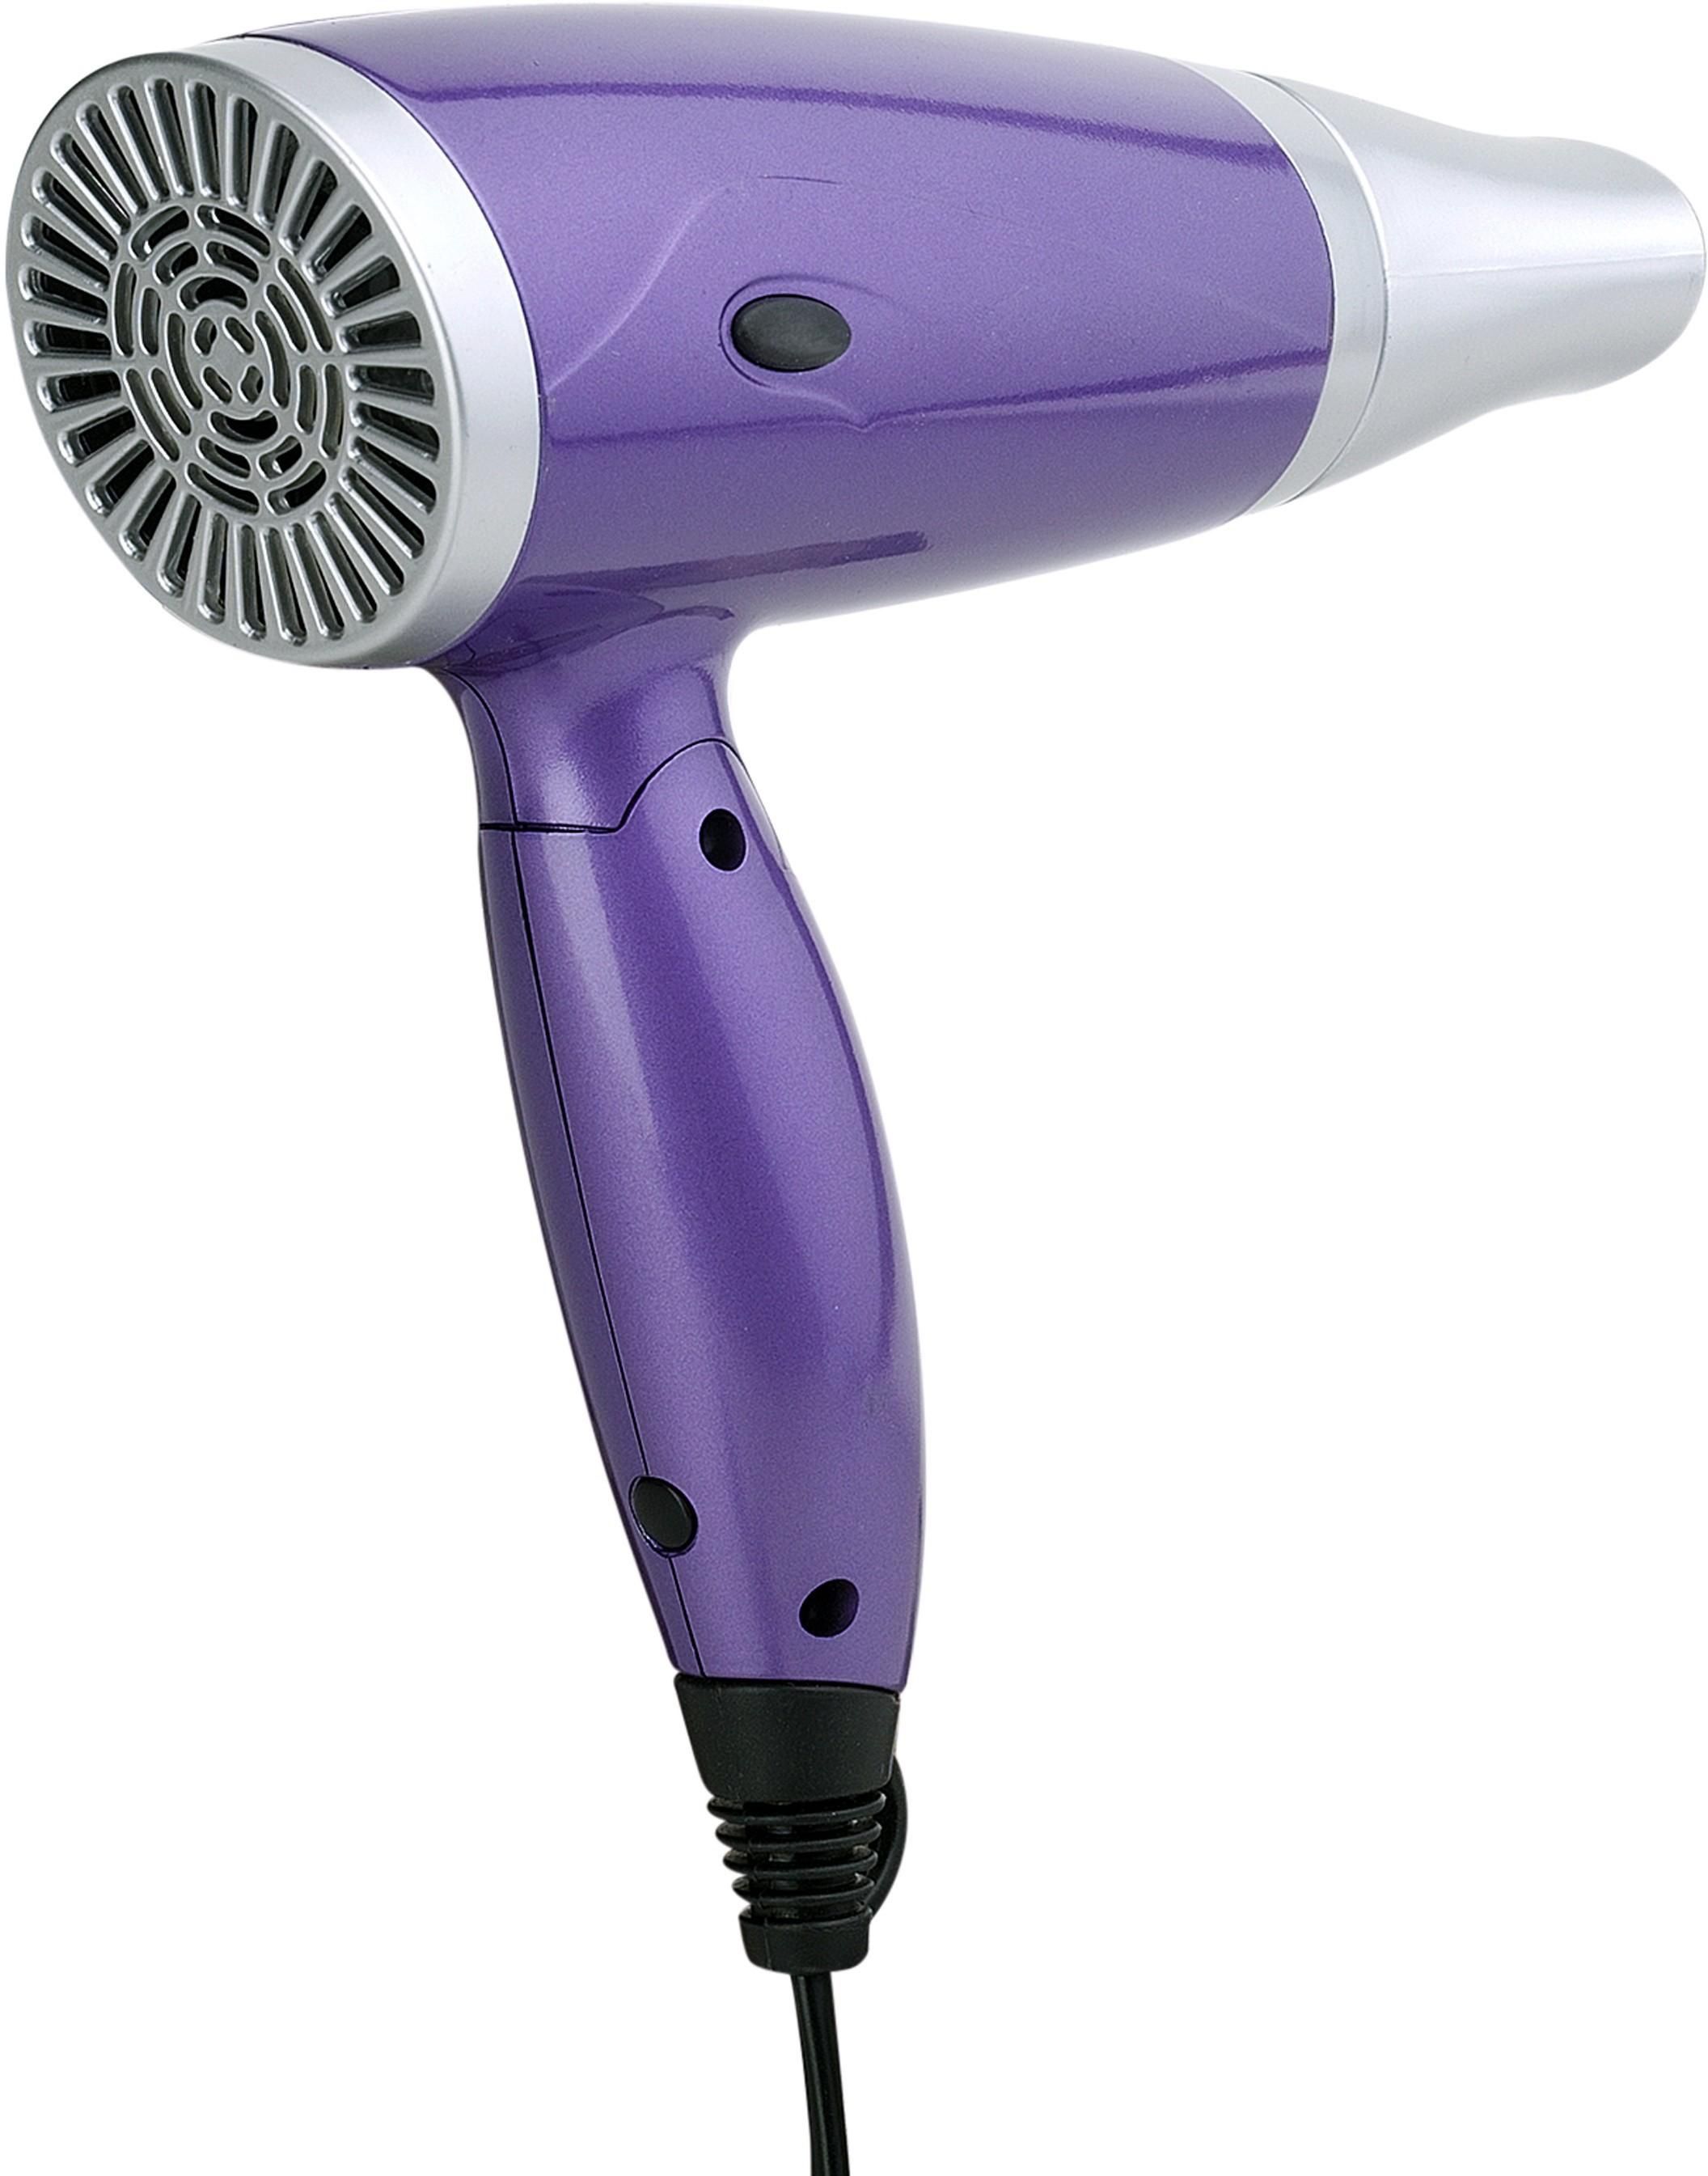 Bestron Personal Care Hair Dryer Purple AHD1400P